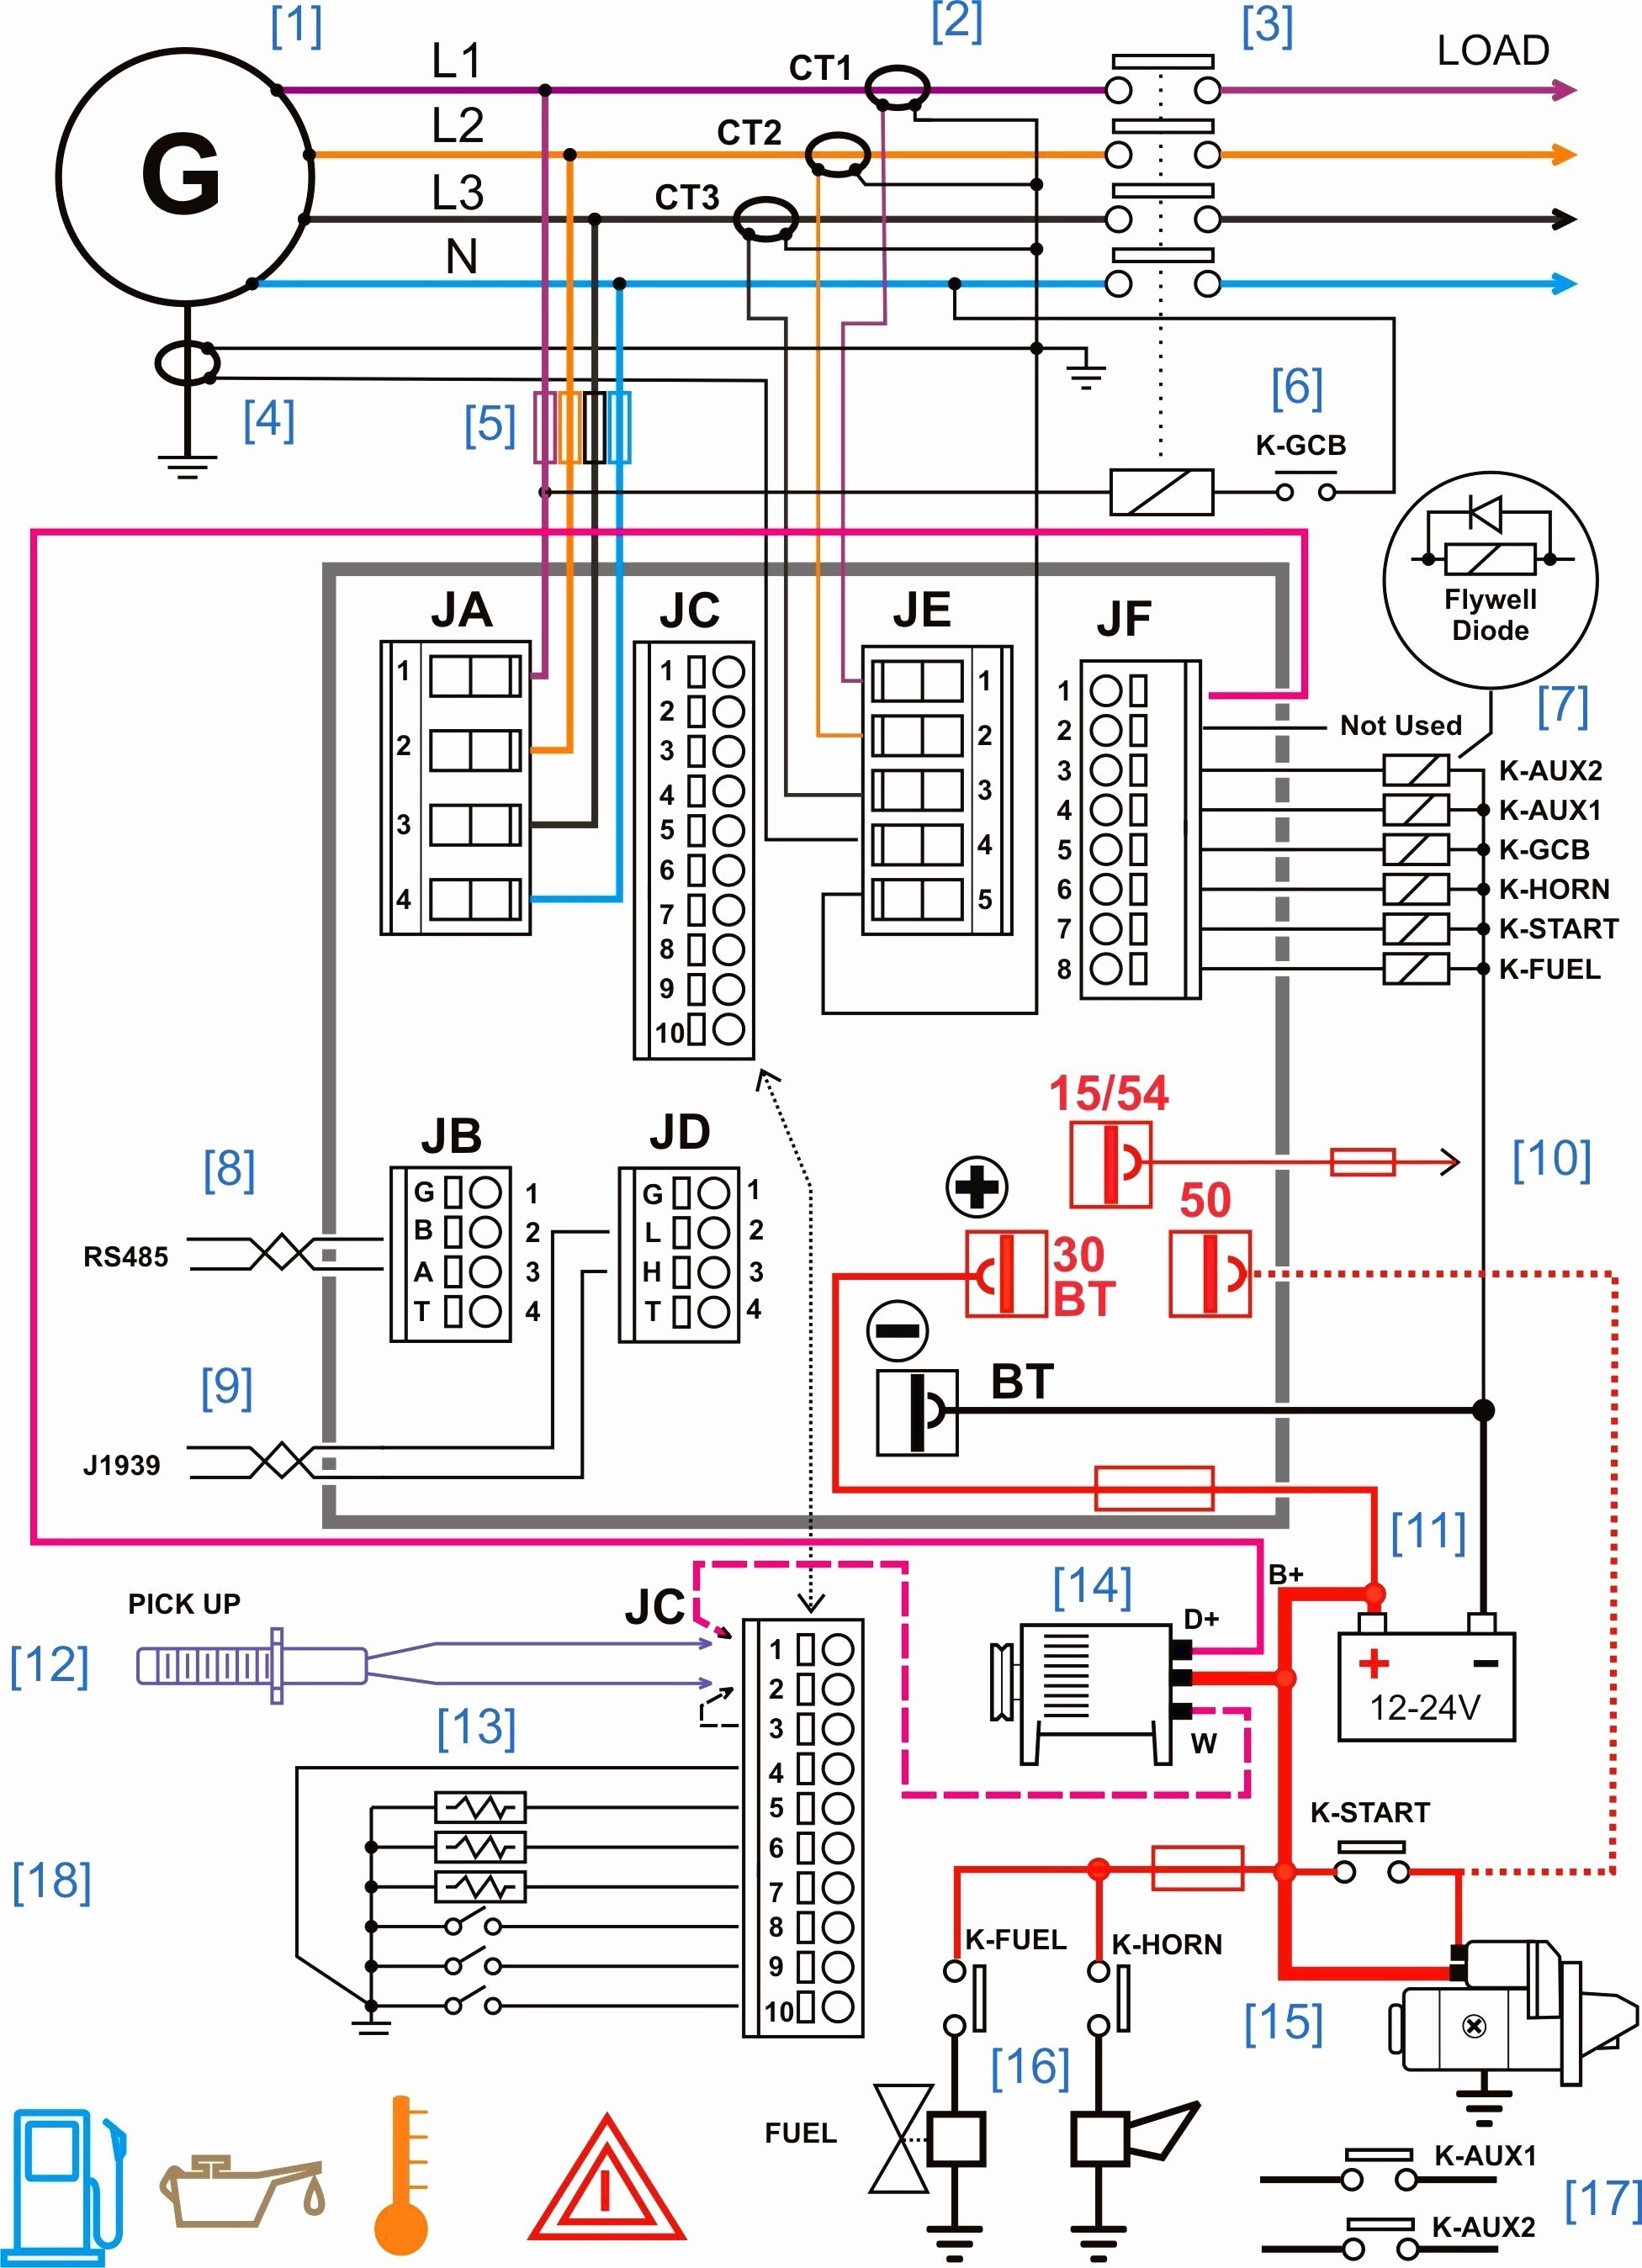 Home Run Wiring Diagram Inspirationa Automotive Wiring Diagram Line Save Best Wiring Diagram Od Rv Park